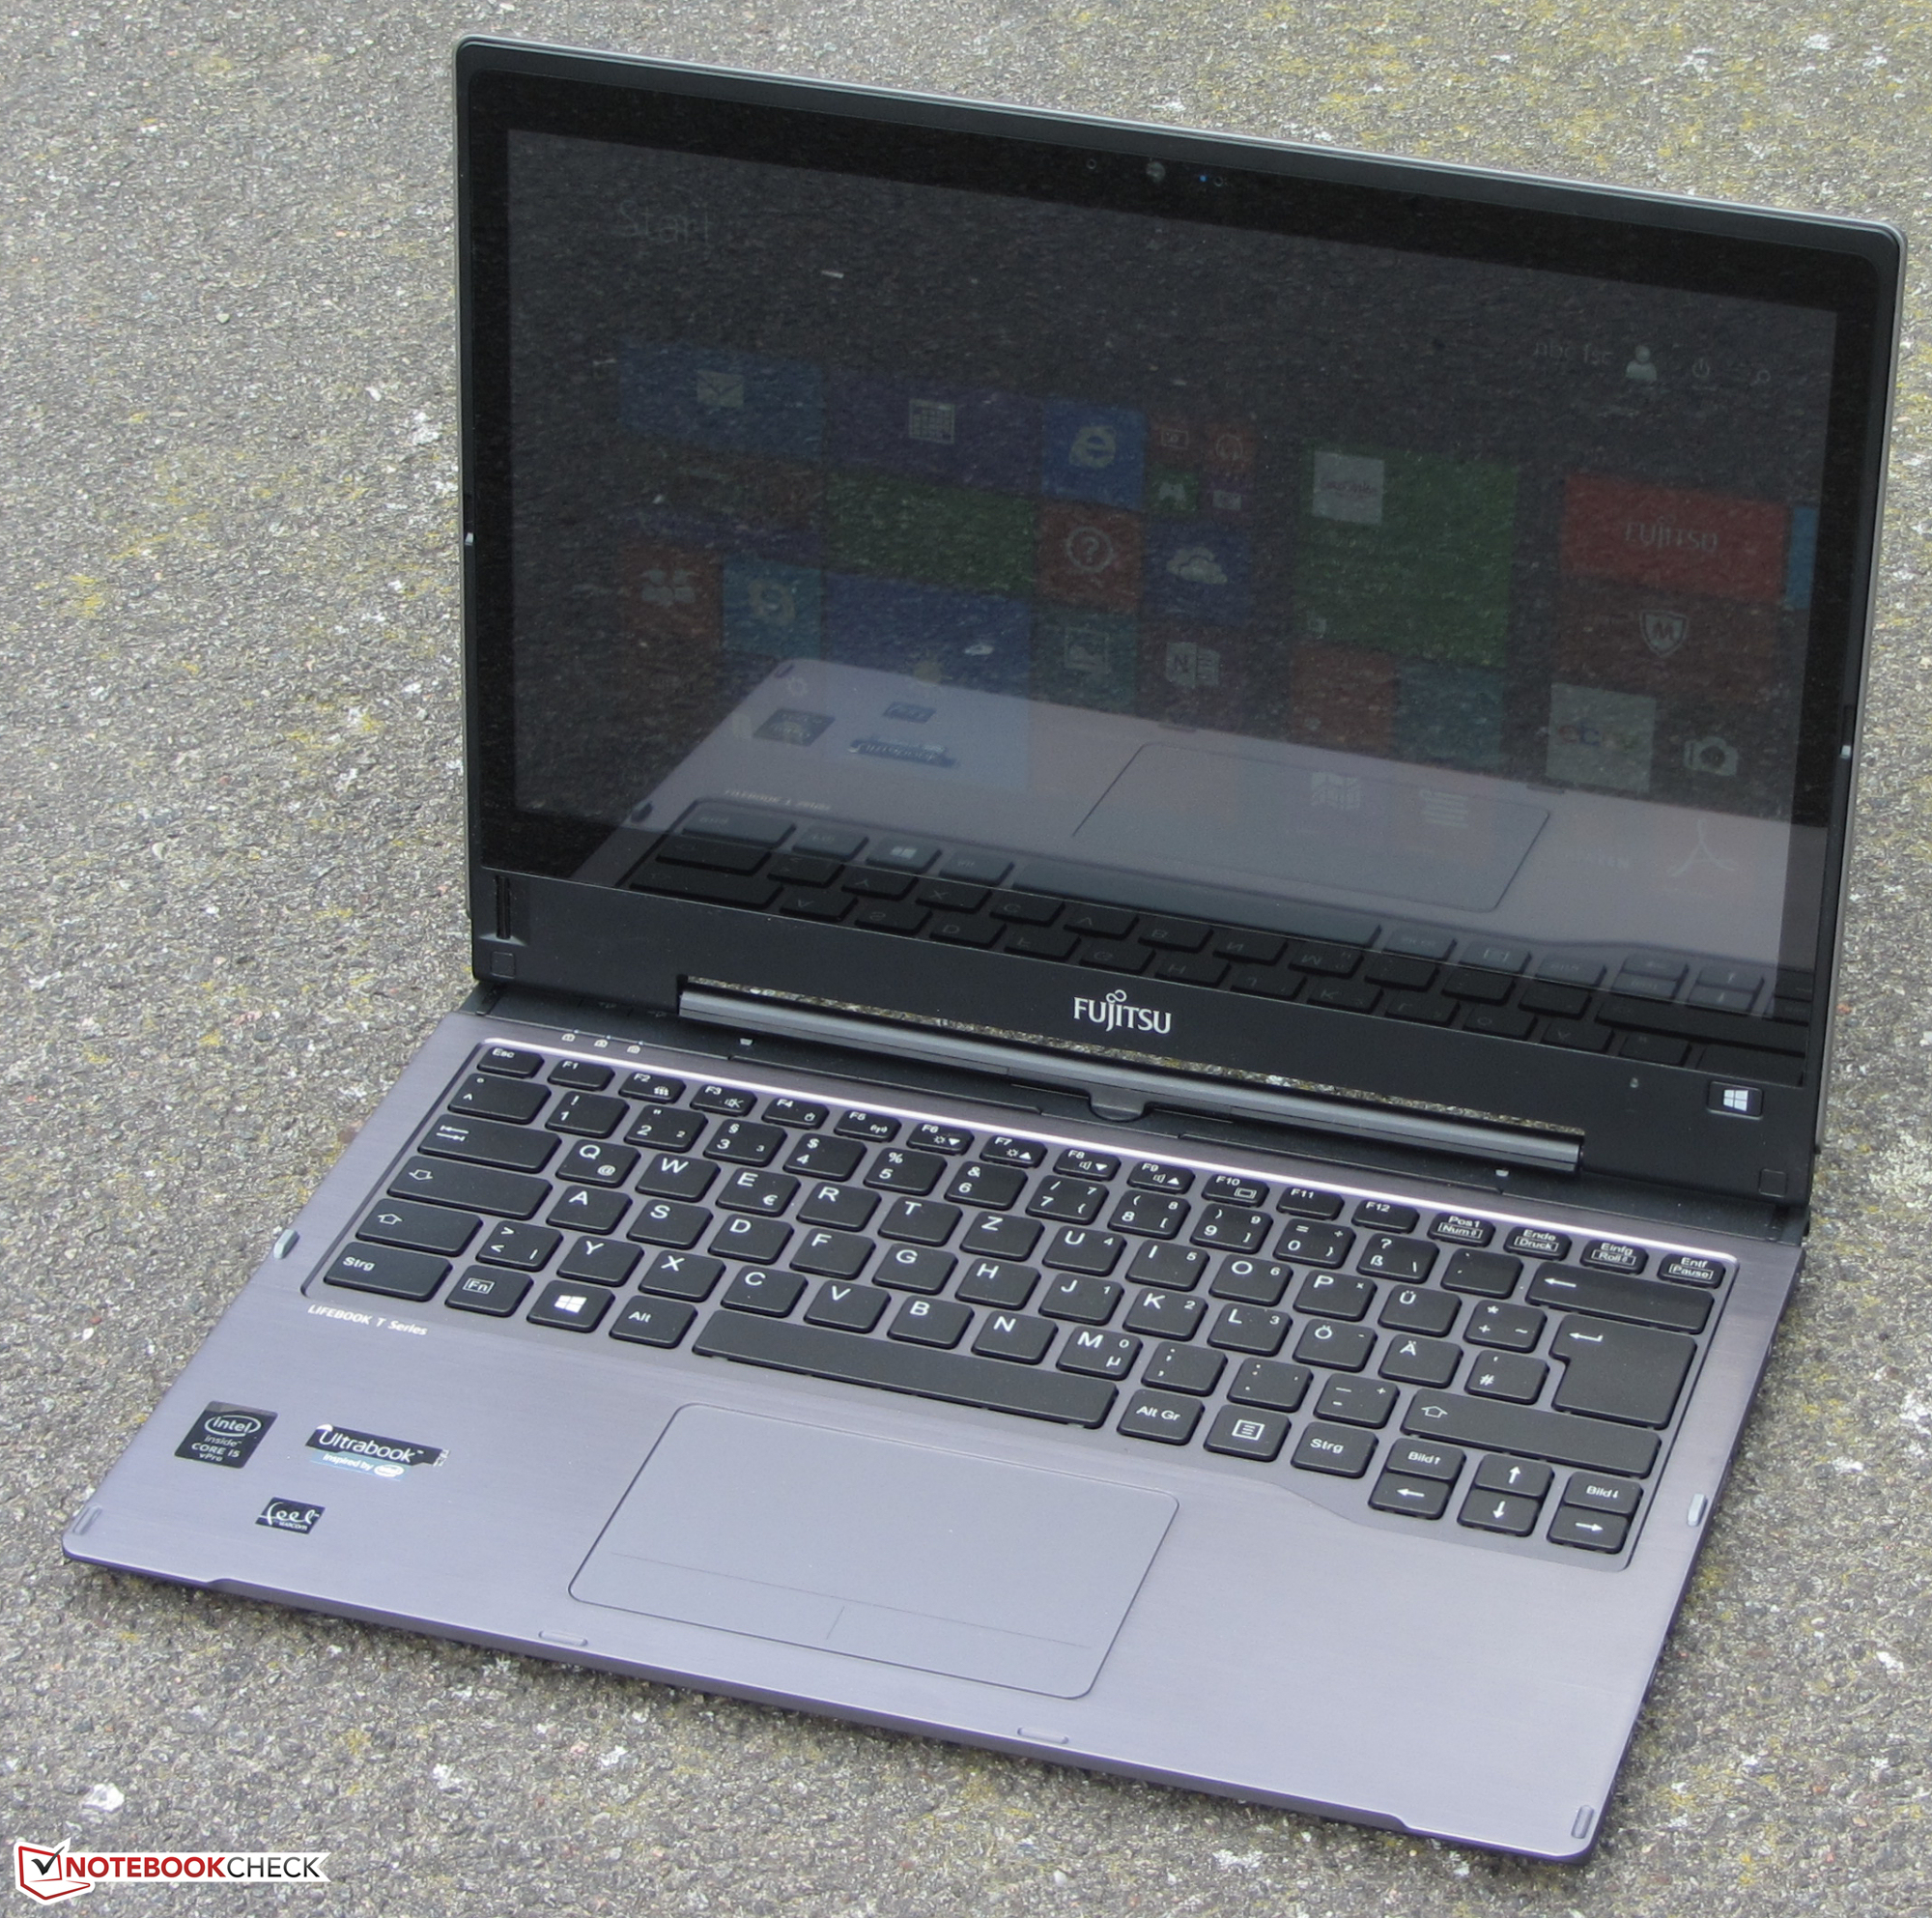 Fujitsu LifeBook T935 Convertible Review - NotebookCheck.net Reviews